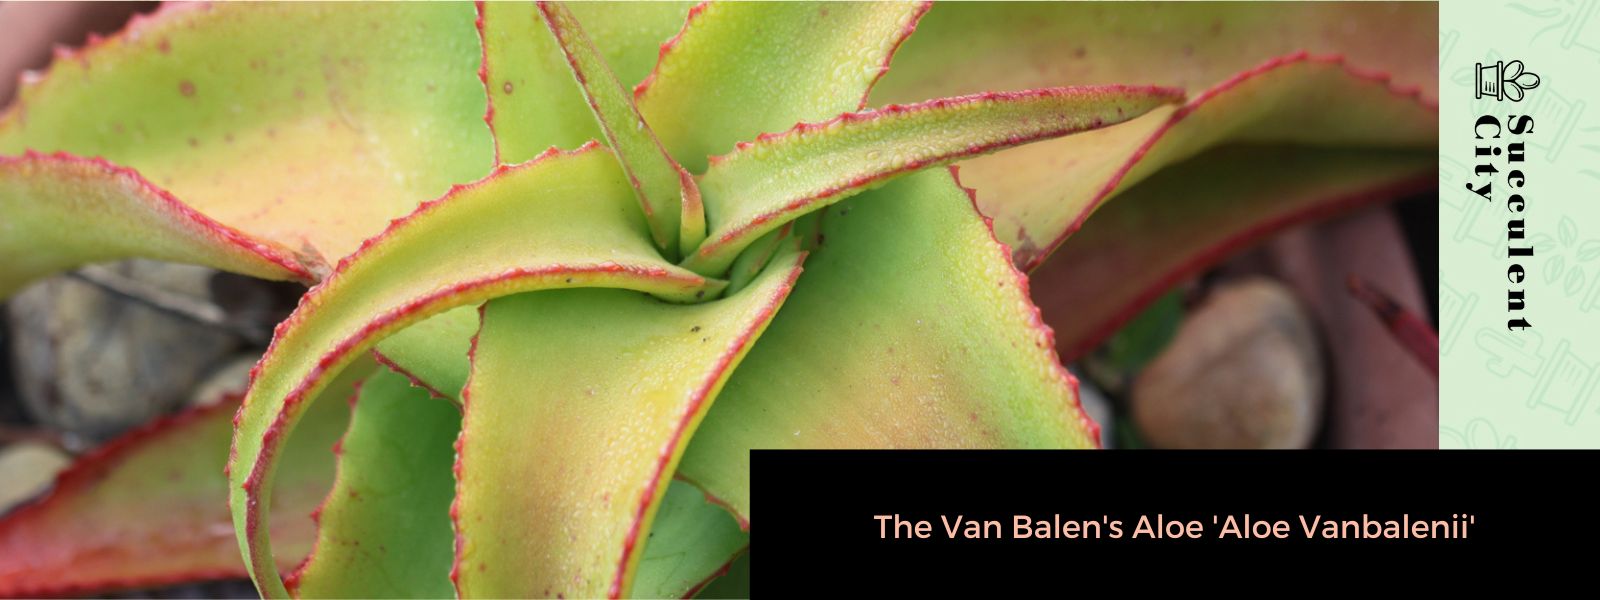 El aloe de Van Balen 'Aloe Vanbalenii'